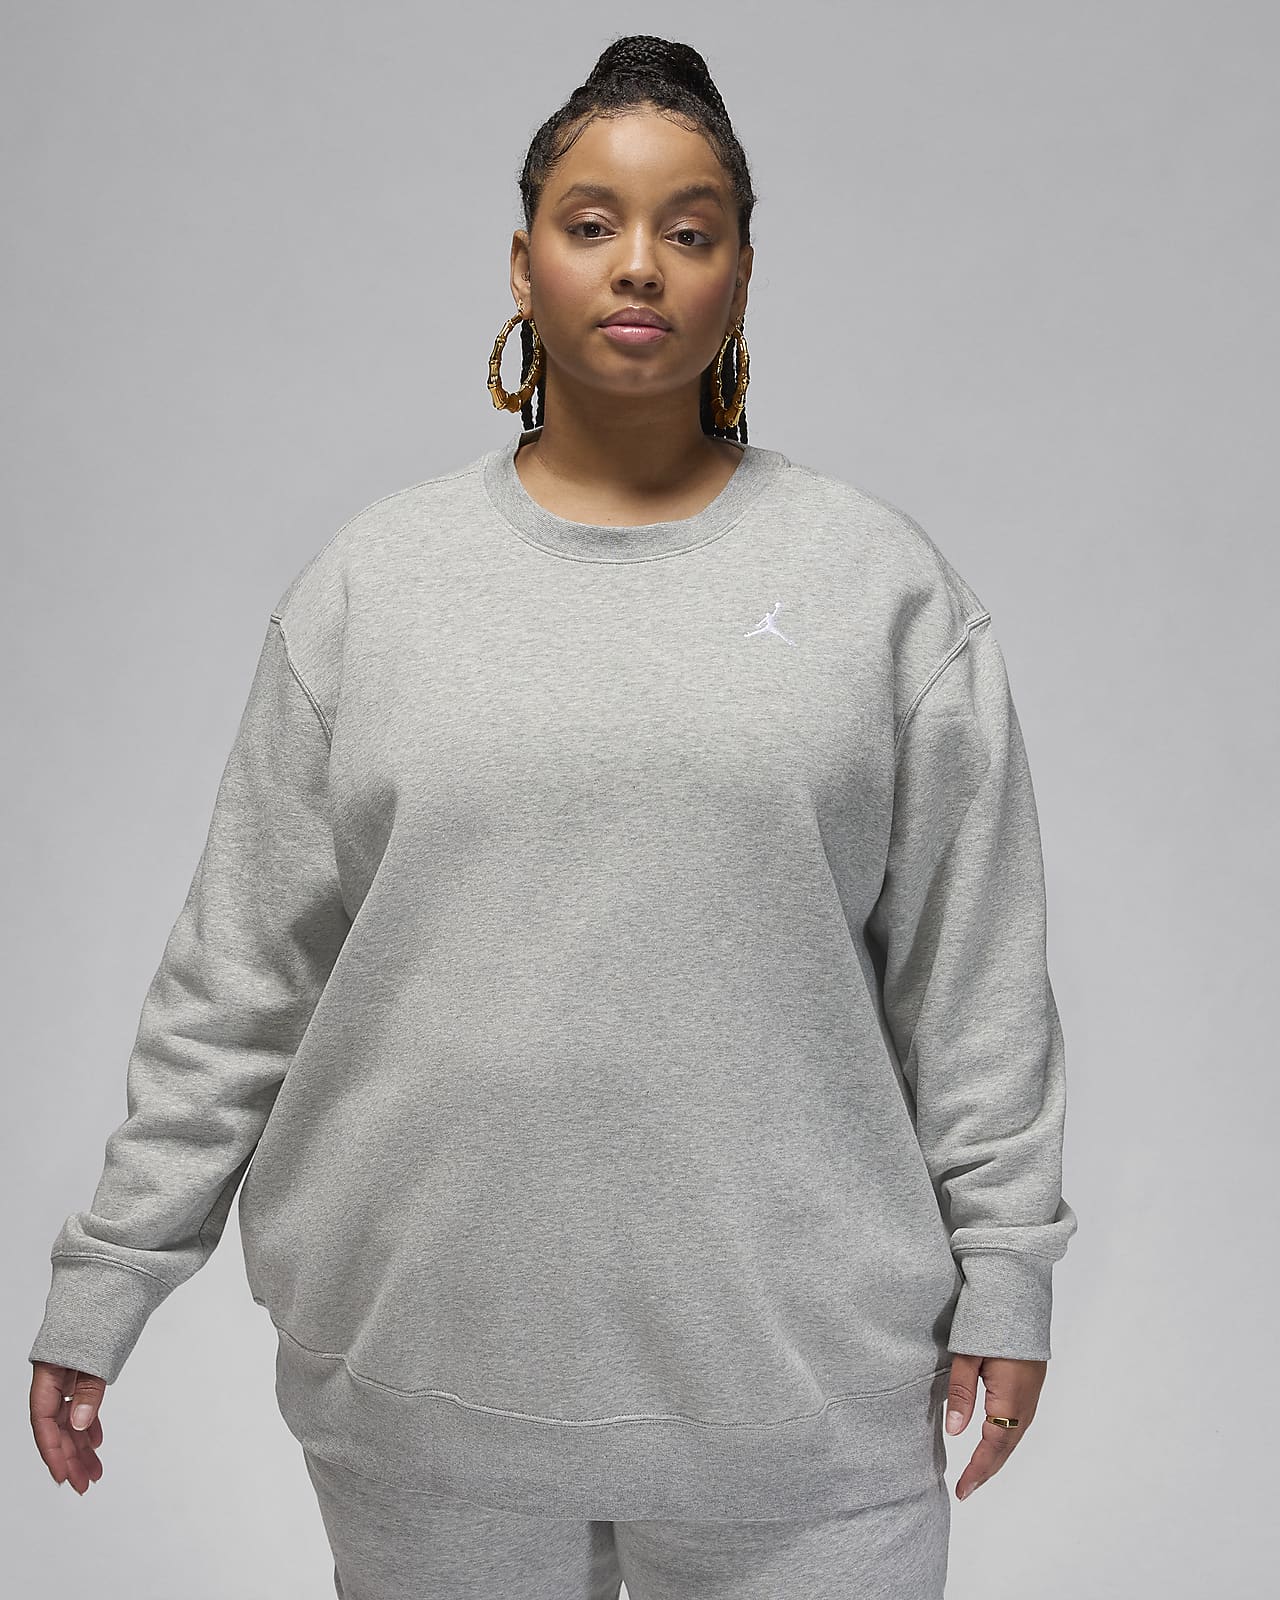 Woman Within Plus Size Fleece Sweatshirt Set Sweatsuit 4x Black